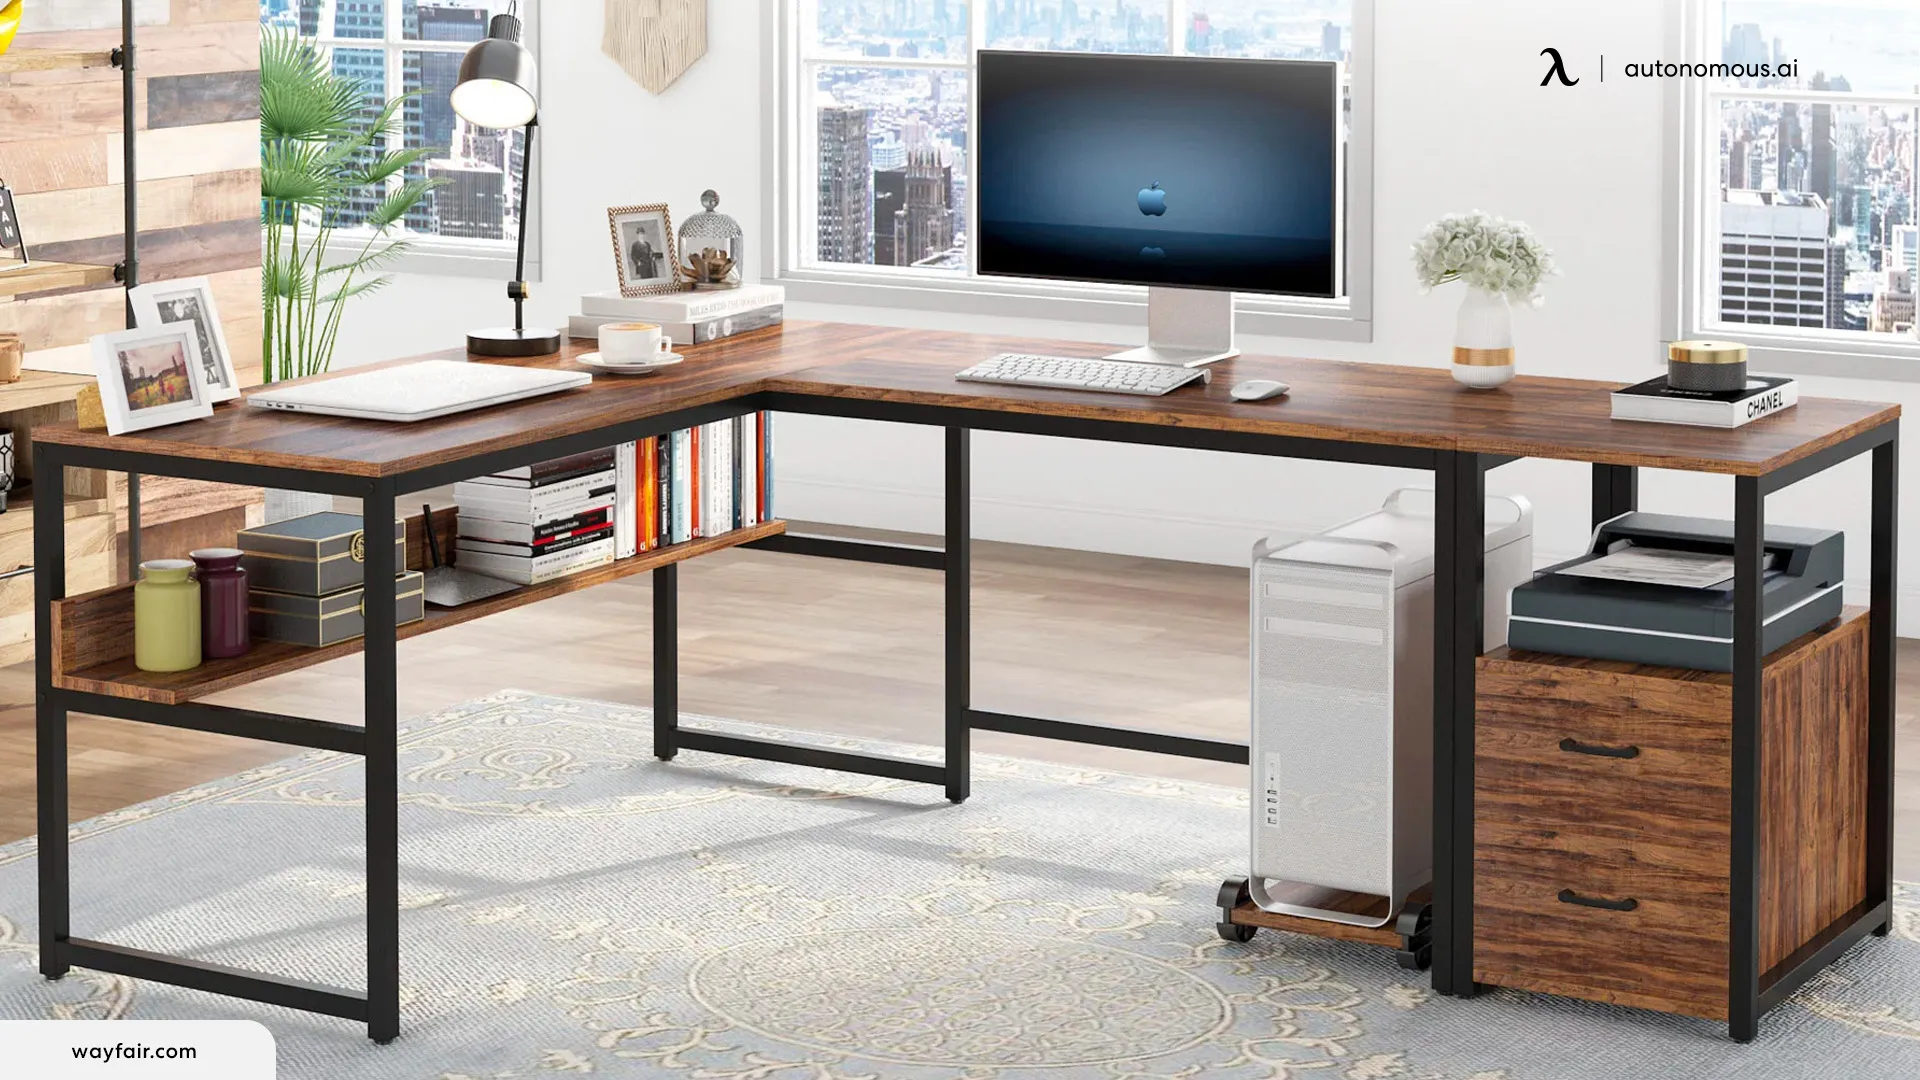 Upgrade Workspace with Black Friday L-Shaped Desk Deals